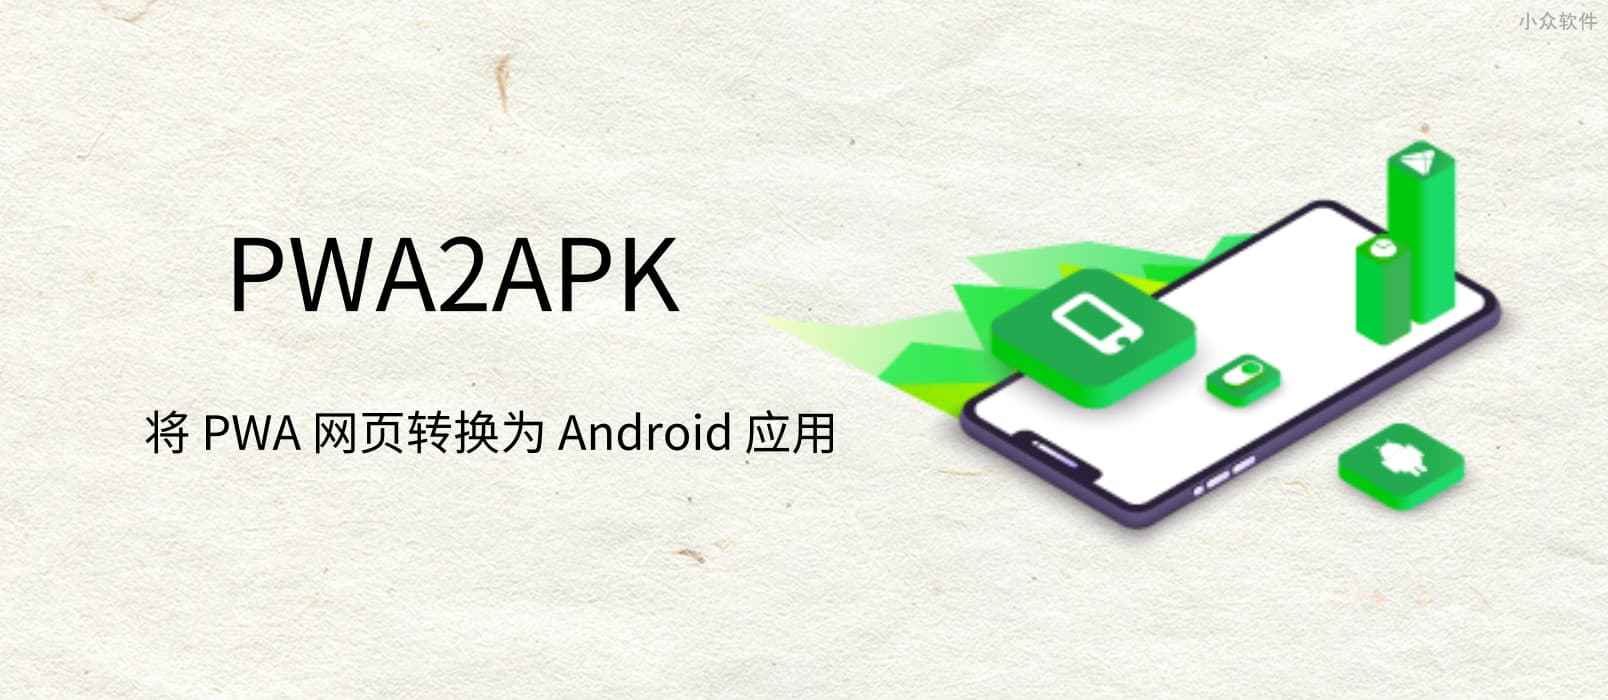 PWA2APK - 将 PWA 网页转换为 Android 应用 1